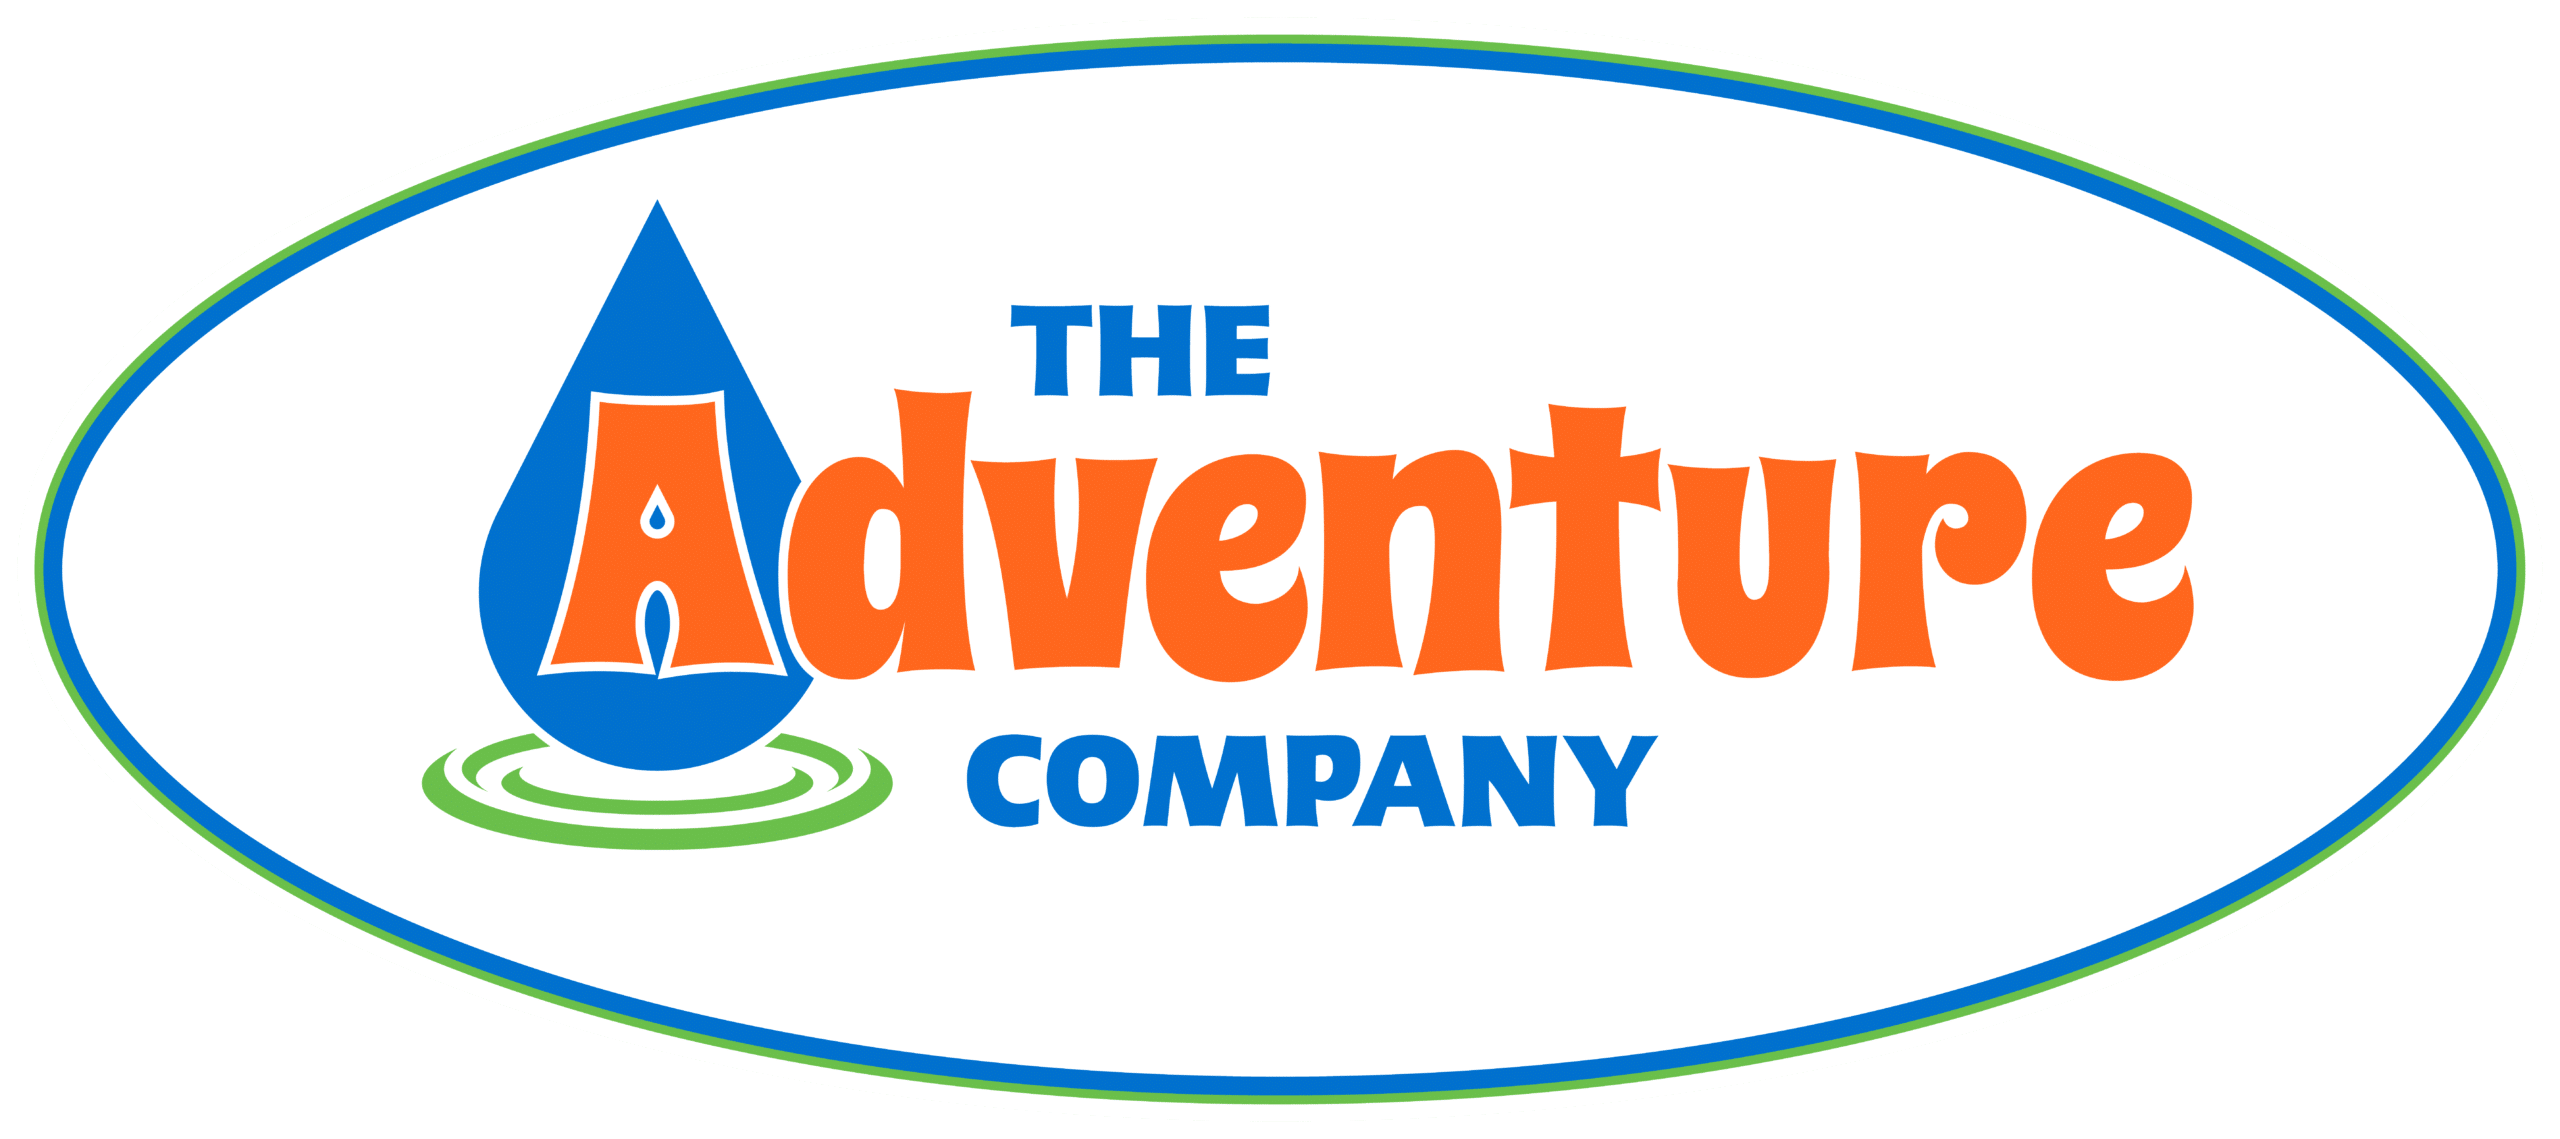 The adventure company logo